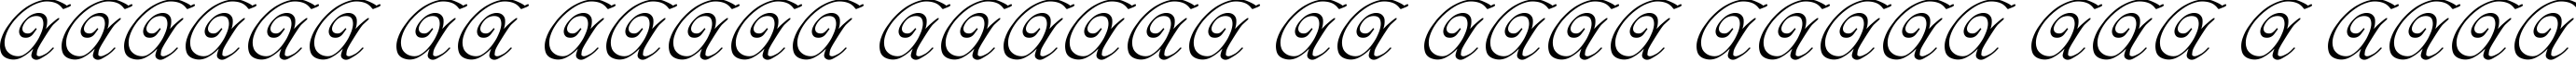 Пример написания шрифтом Elzevir текста на французском